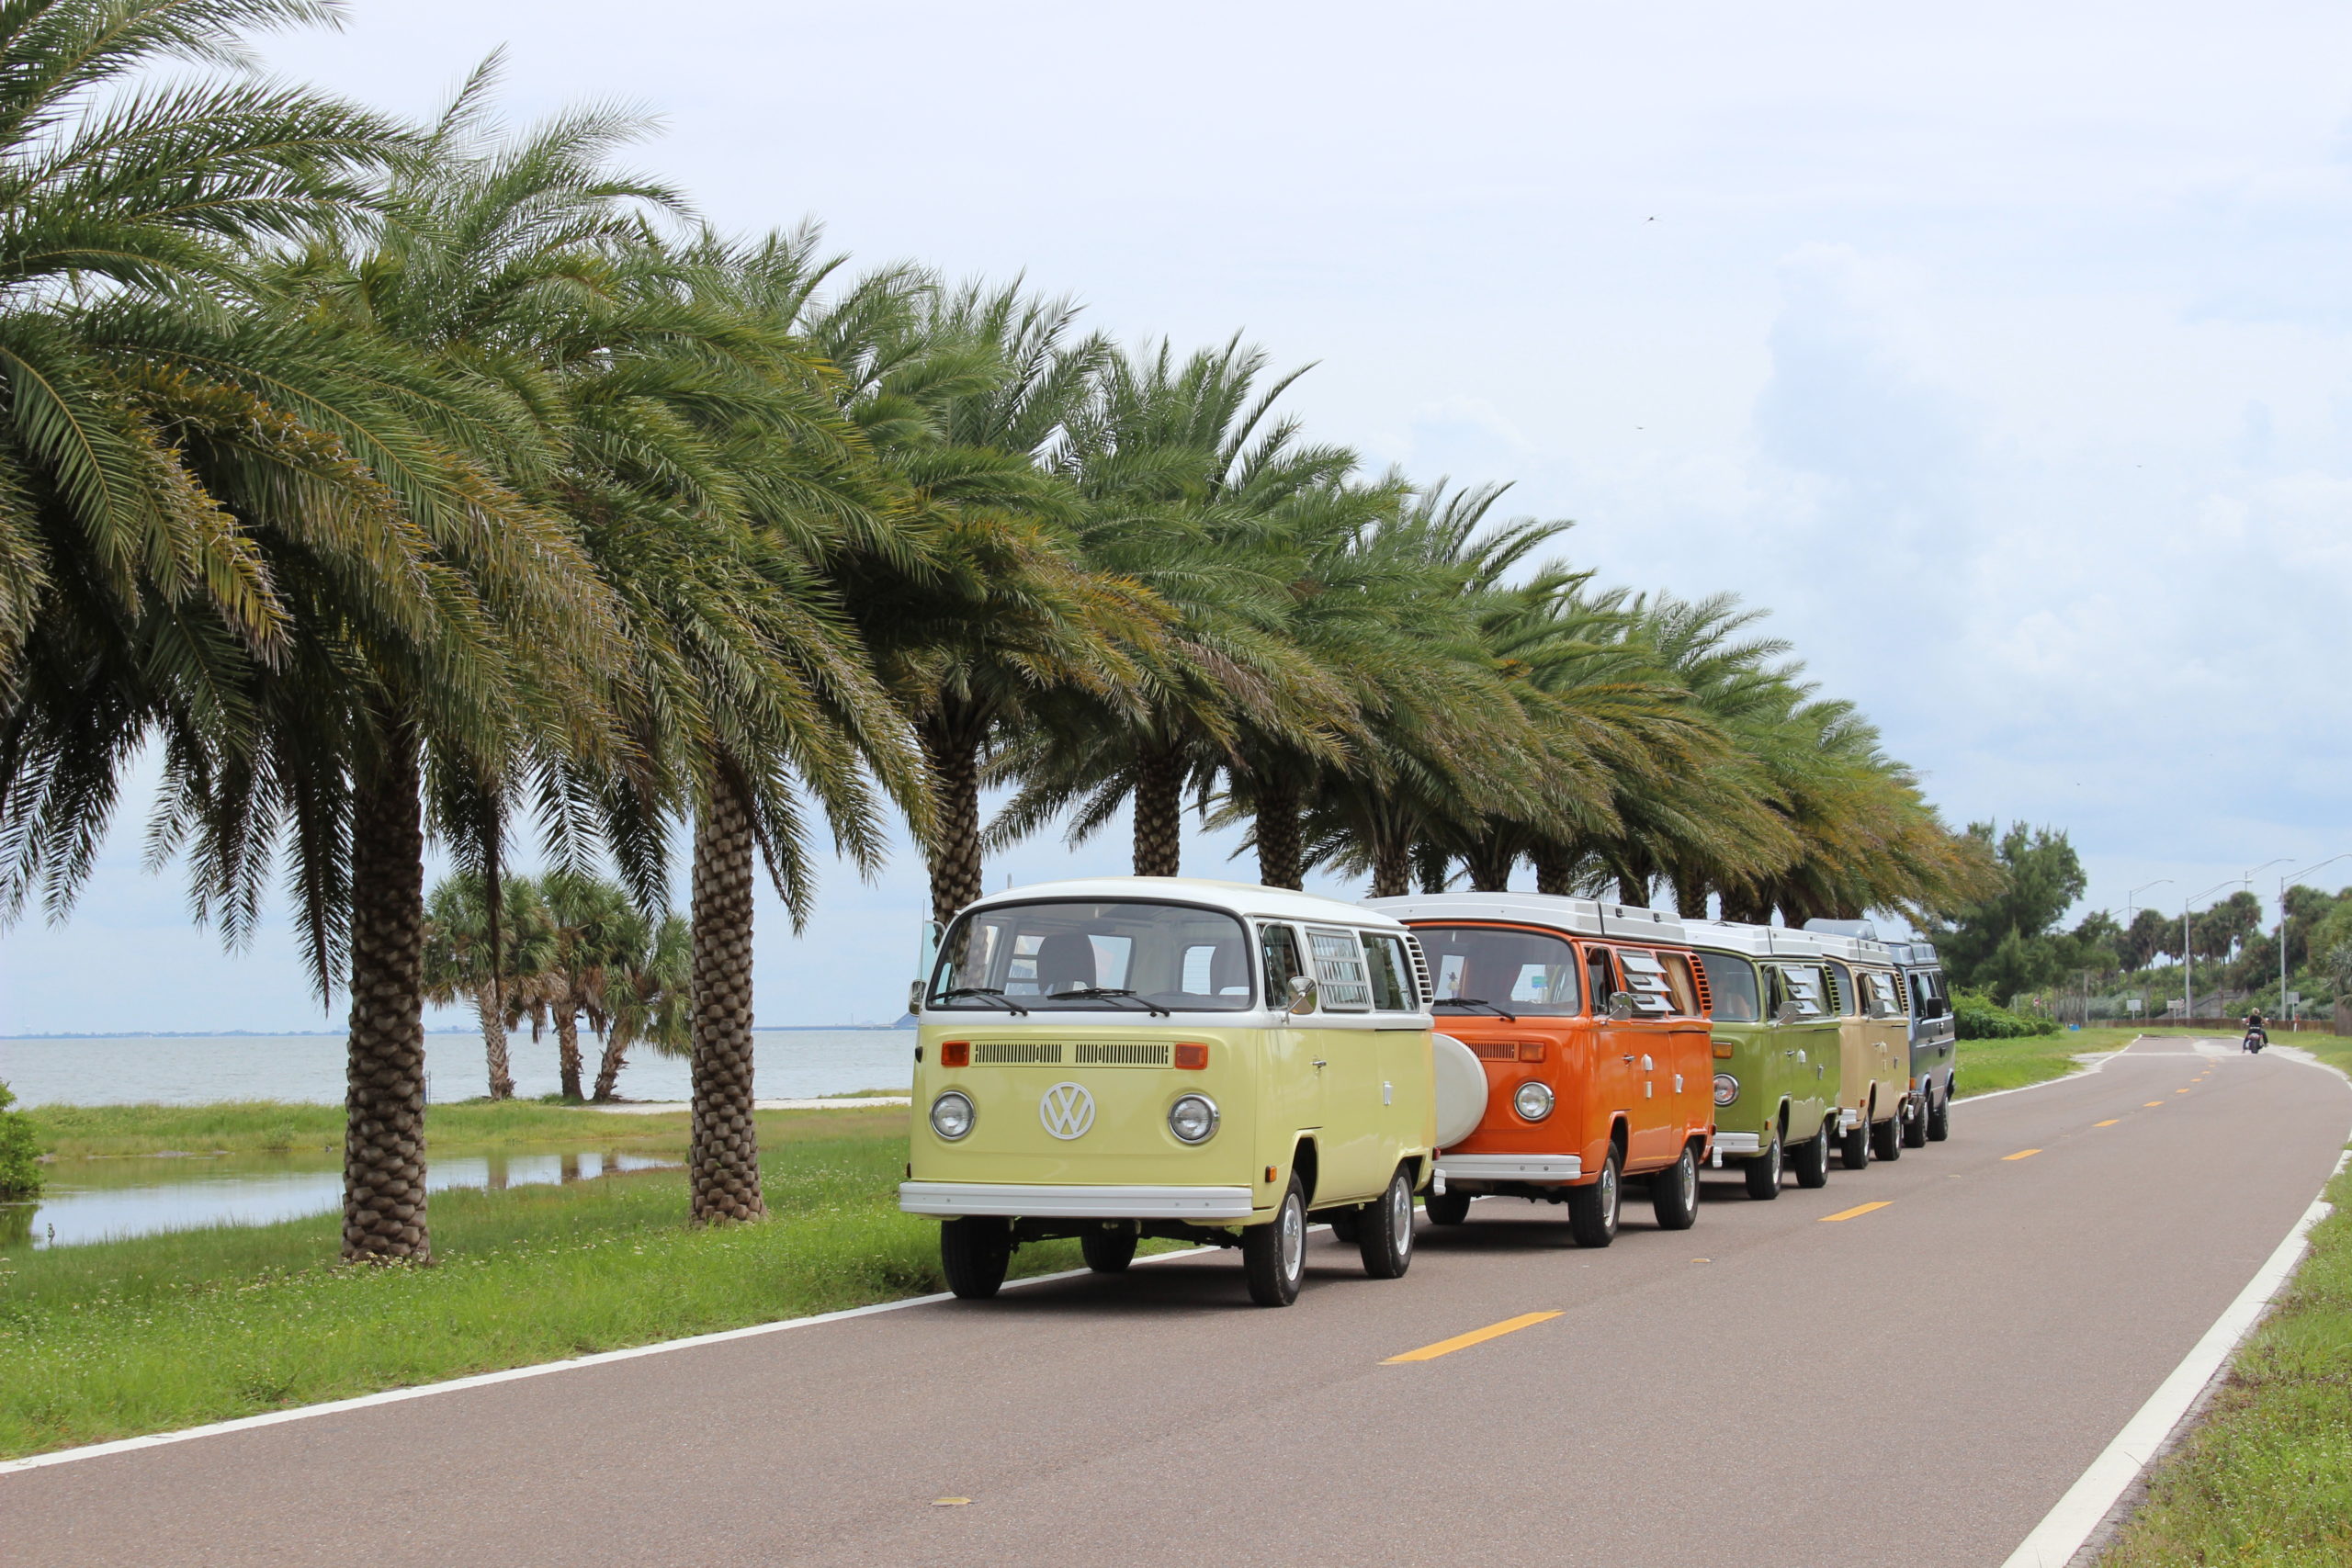 Florida Oldscool Campers revives a 1970s favorite by way of converted VW campervan rentals.